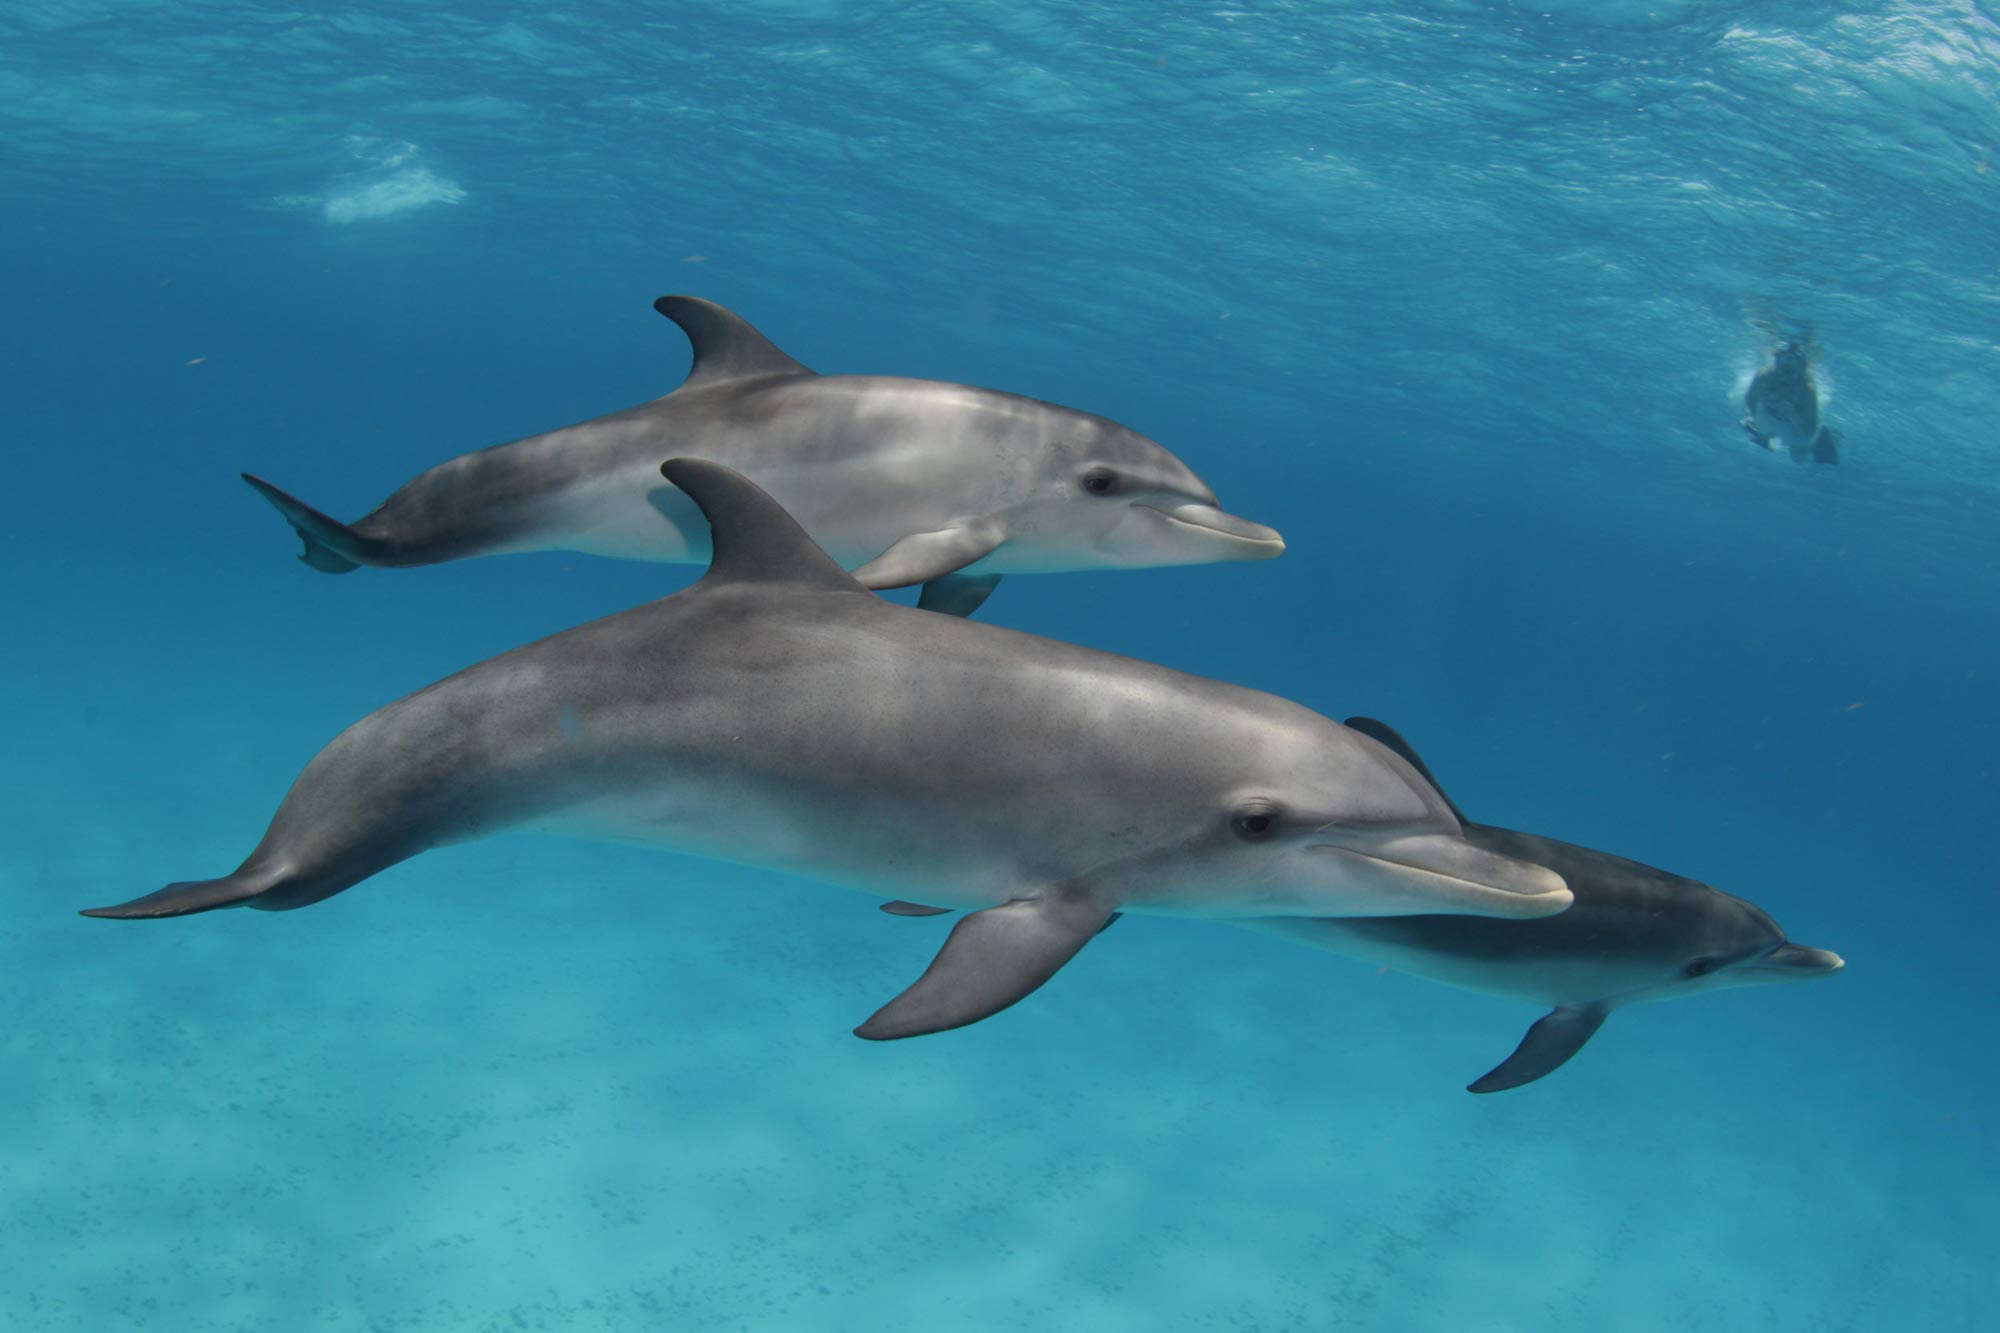 海洋生物 - Dolphin Dream